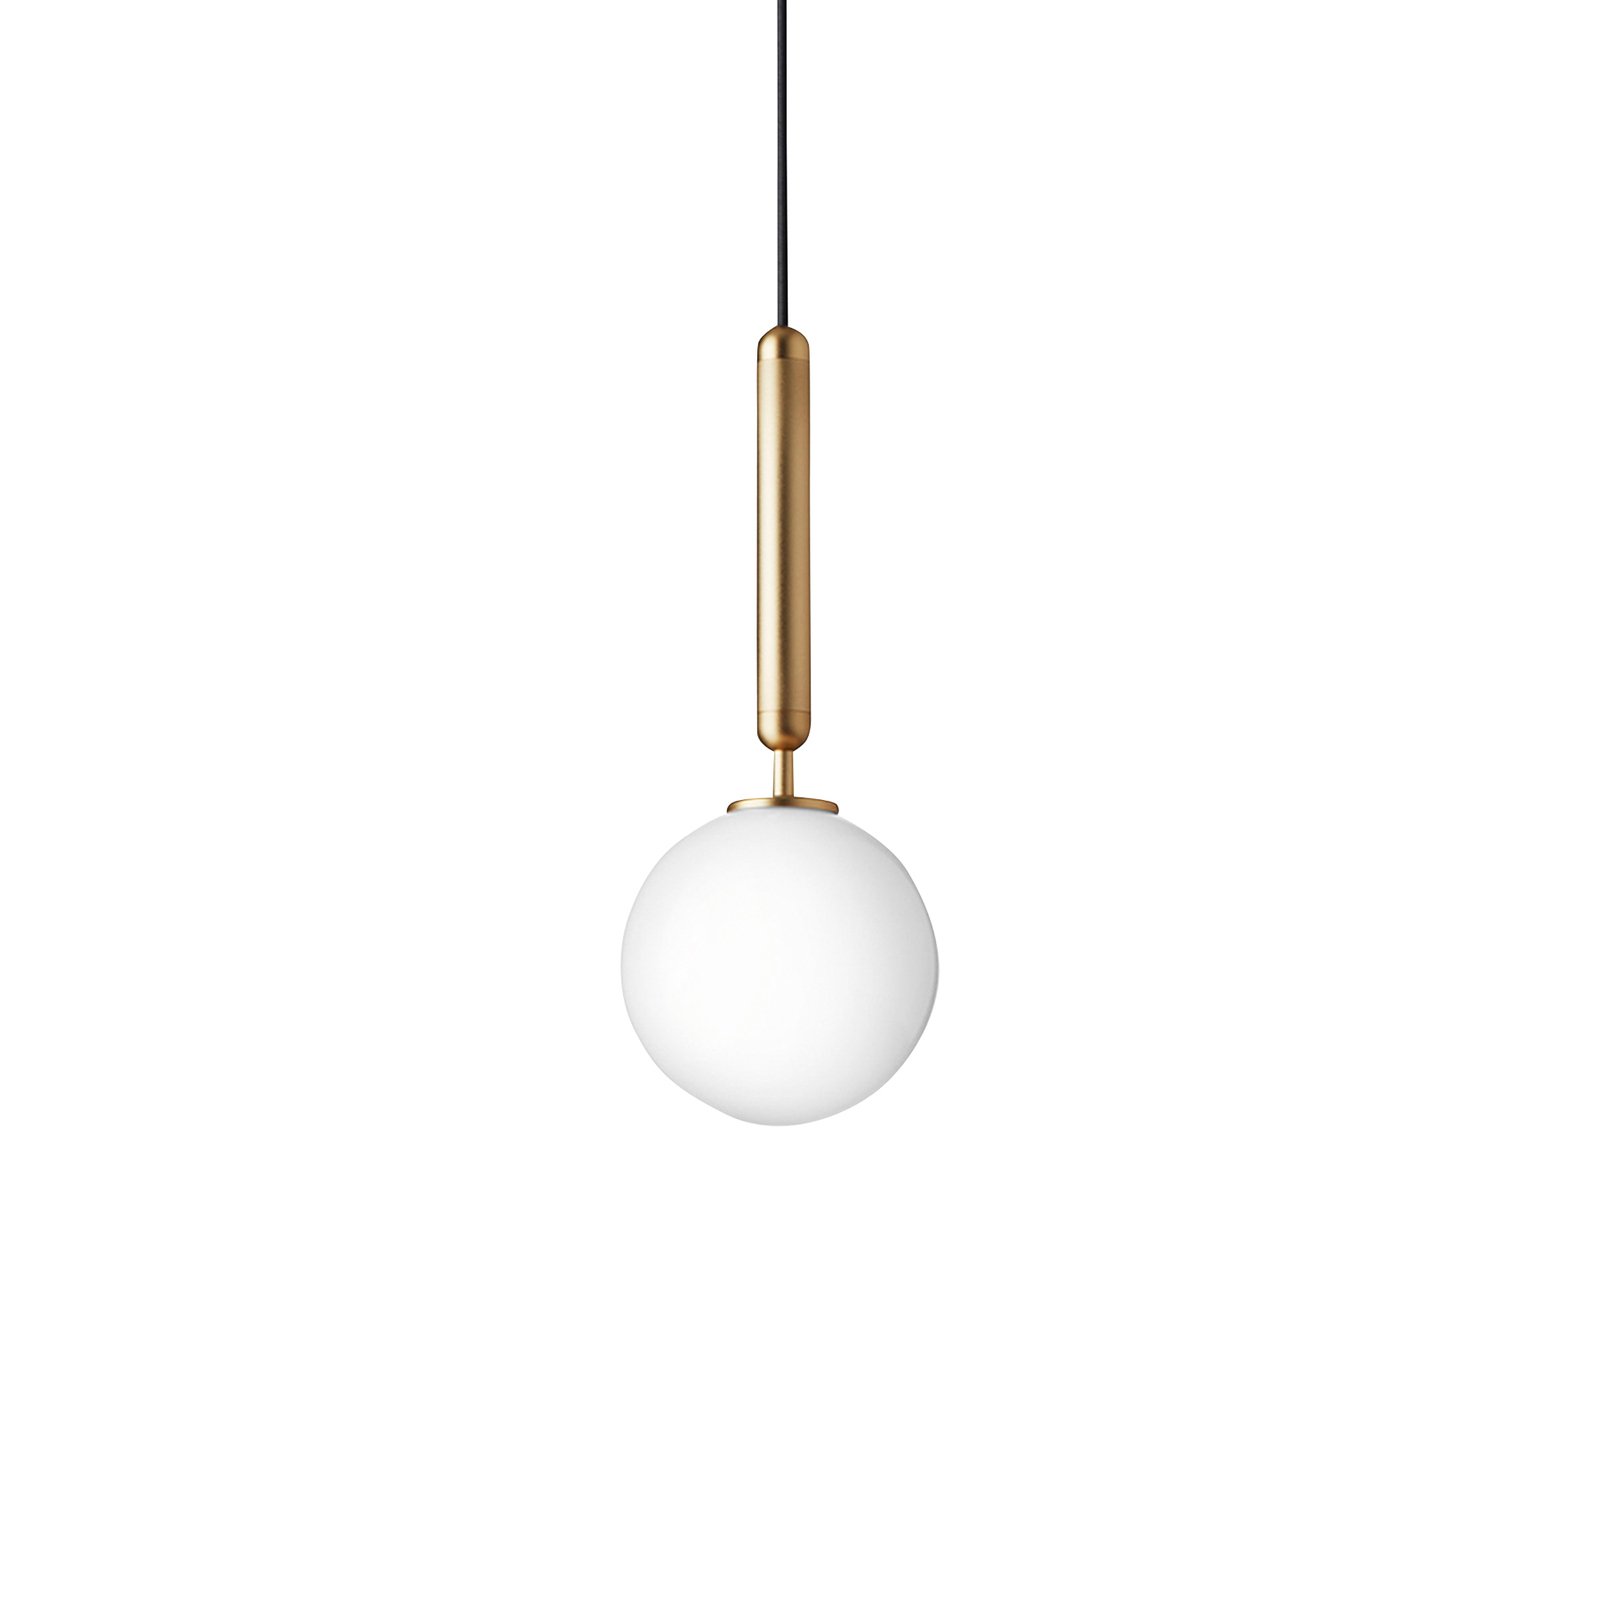 Nuura Miira 1 hanging light 1-bulb brass/white